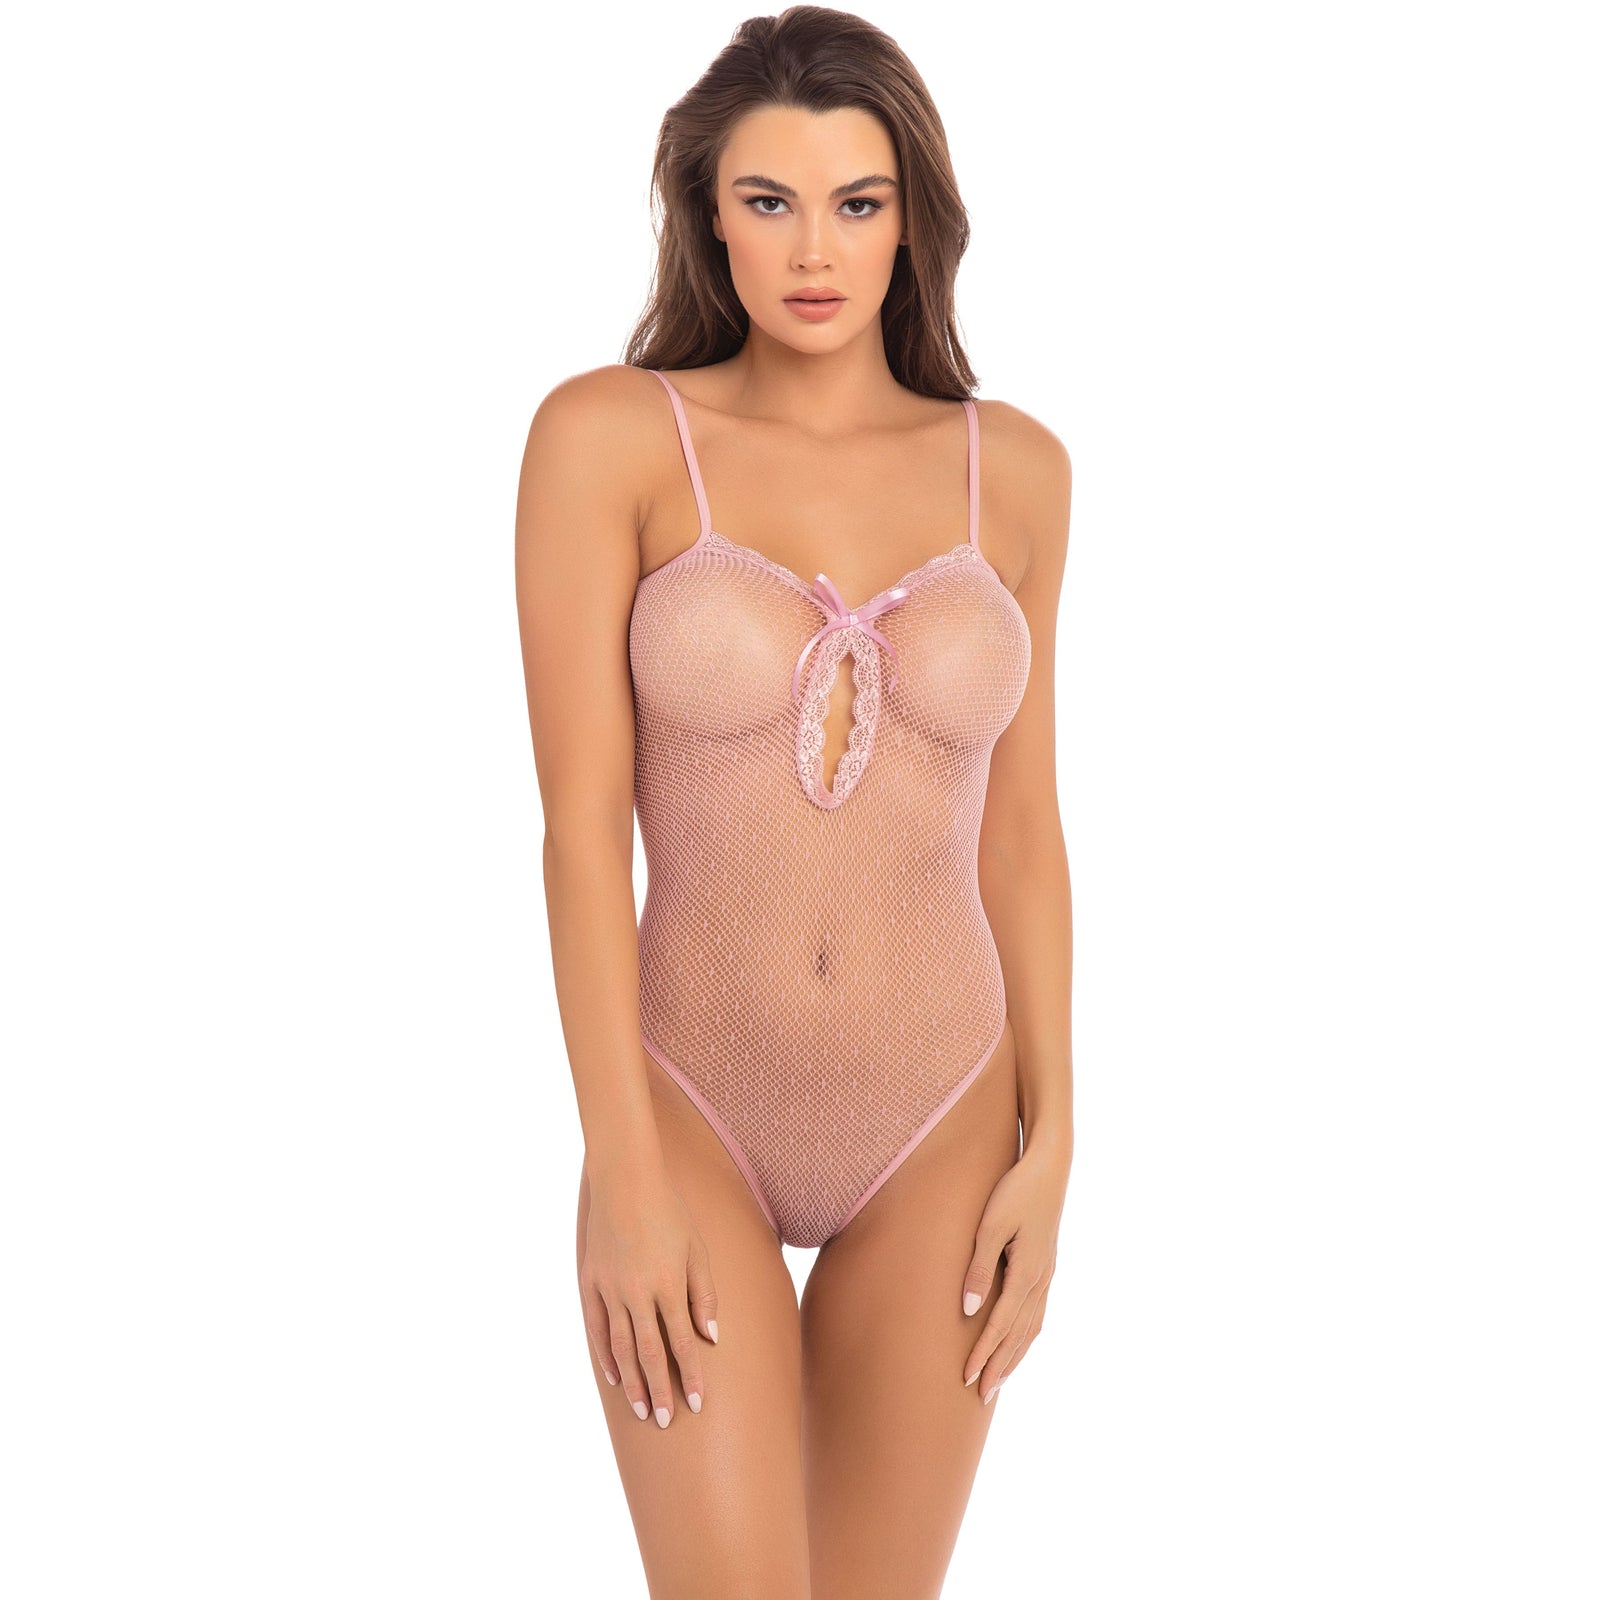 Rene Rofe - Undone See Through Bodysuit Costume OS (Pink)